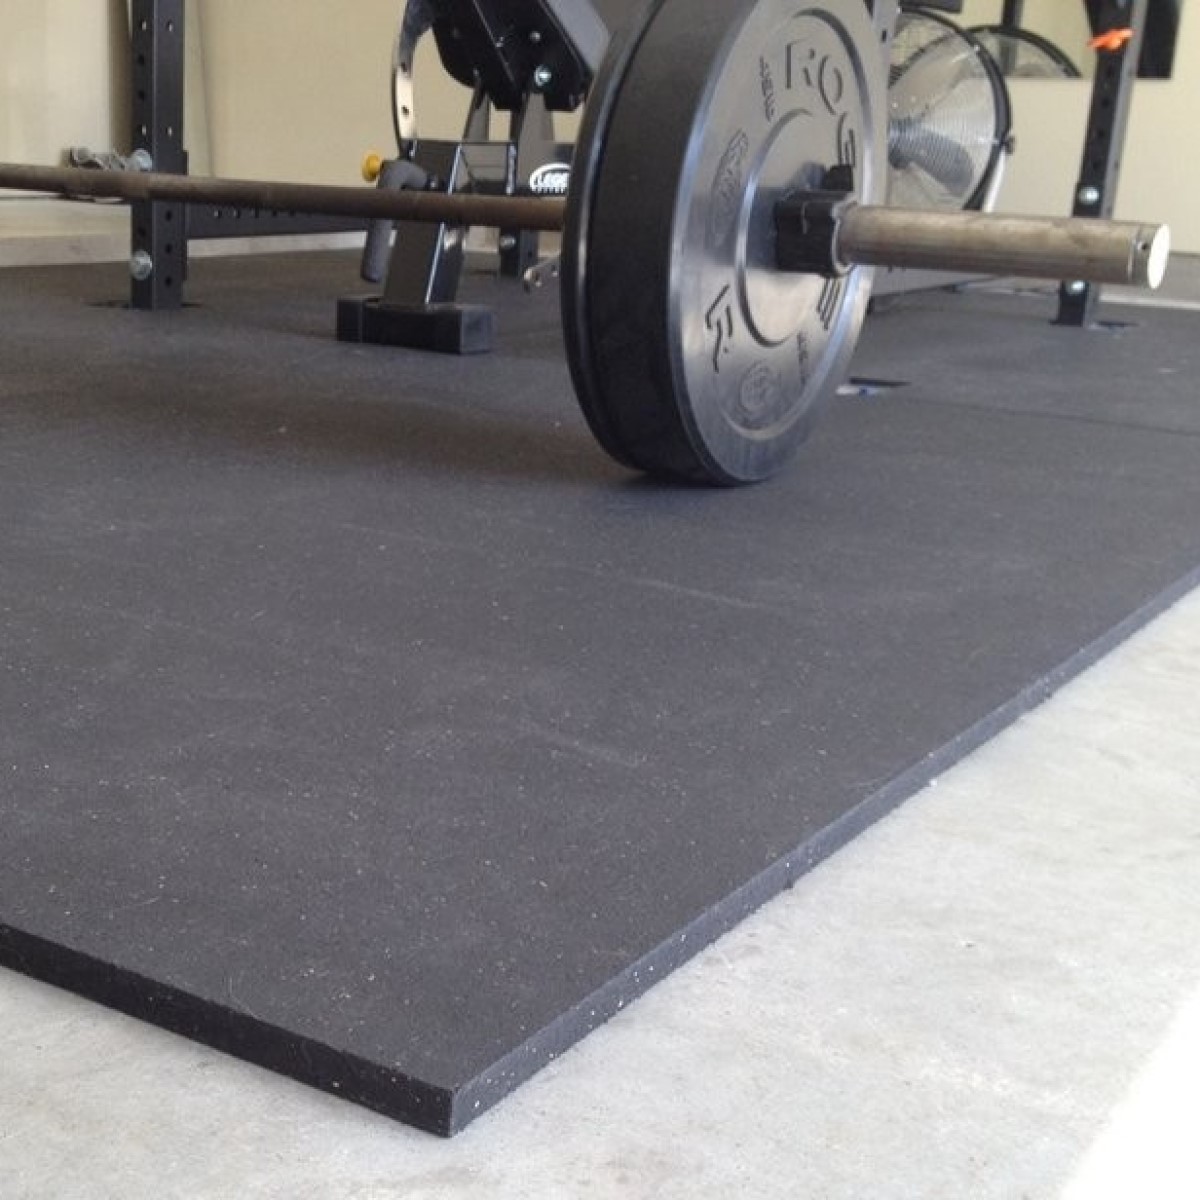 Floor Mat Exercise GYM RUBBER FLOORING Tiles Home Fitness Workout Mat USA Lot 